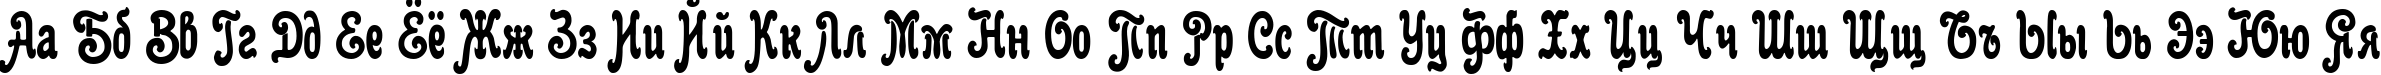 Пример написания русского алфавита шрифтом Anfisa Grotesk